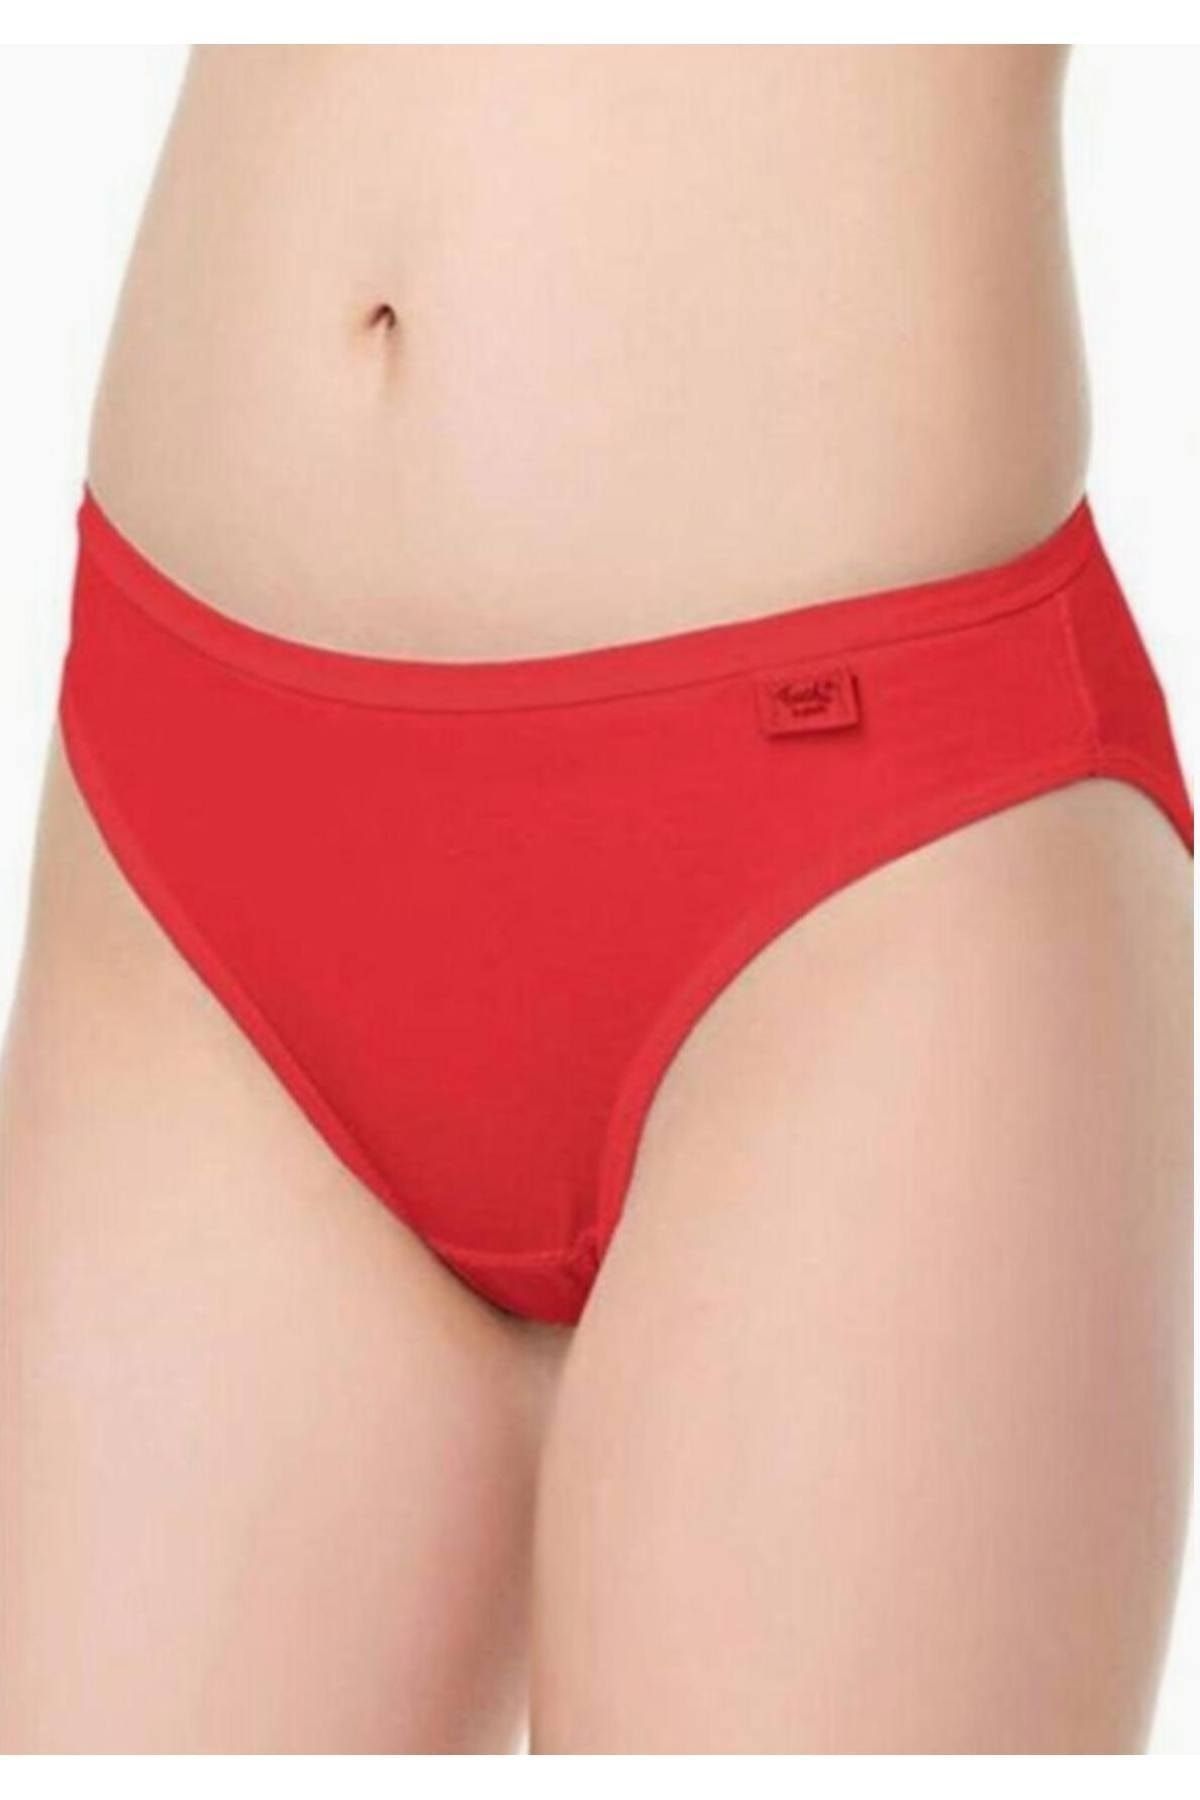 JOCKEY Women Bikini Red Panty - Buy JOCKEY Women Bikini Red Panty